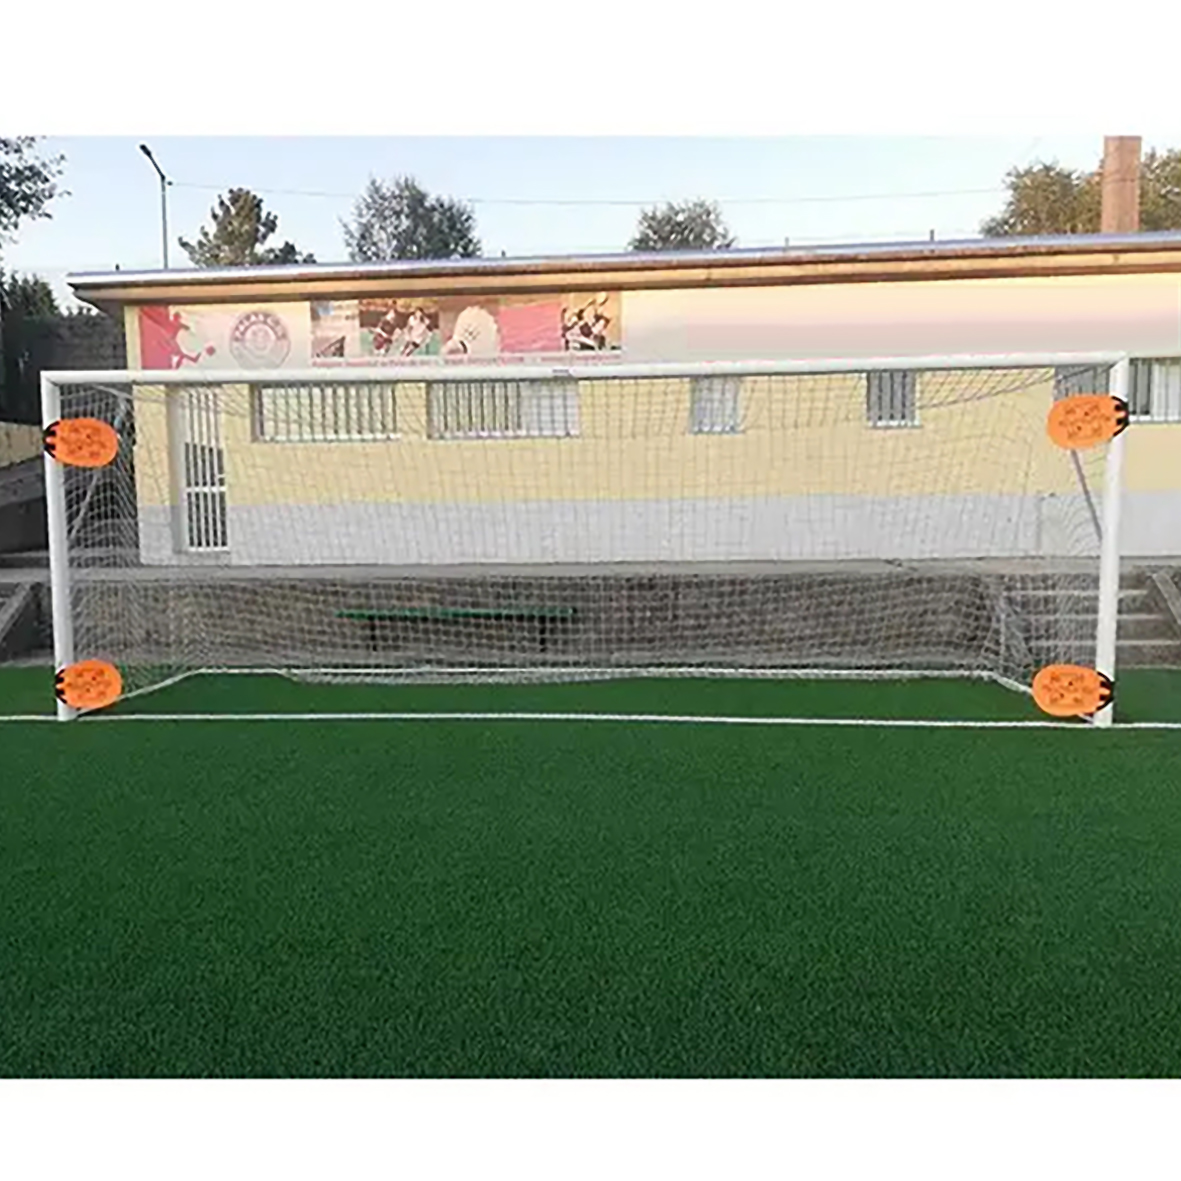 FOOTBALL / FOOTBALL 7-A-SIDE / FUTSAL SOFTEE AIMING SYSTEM.